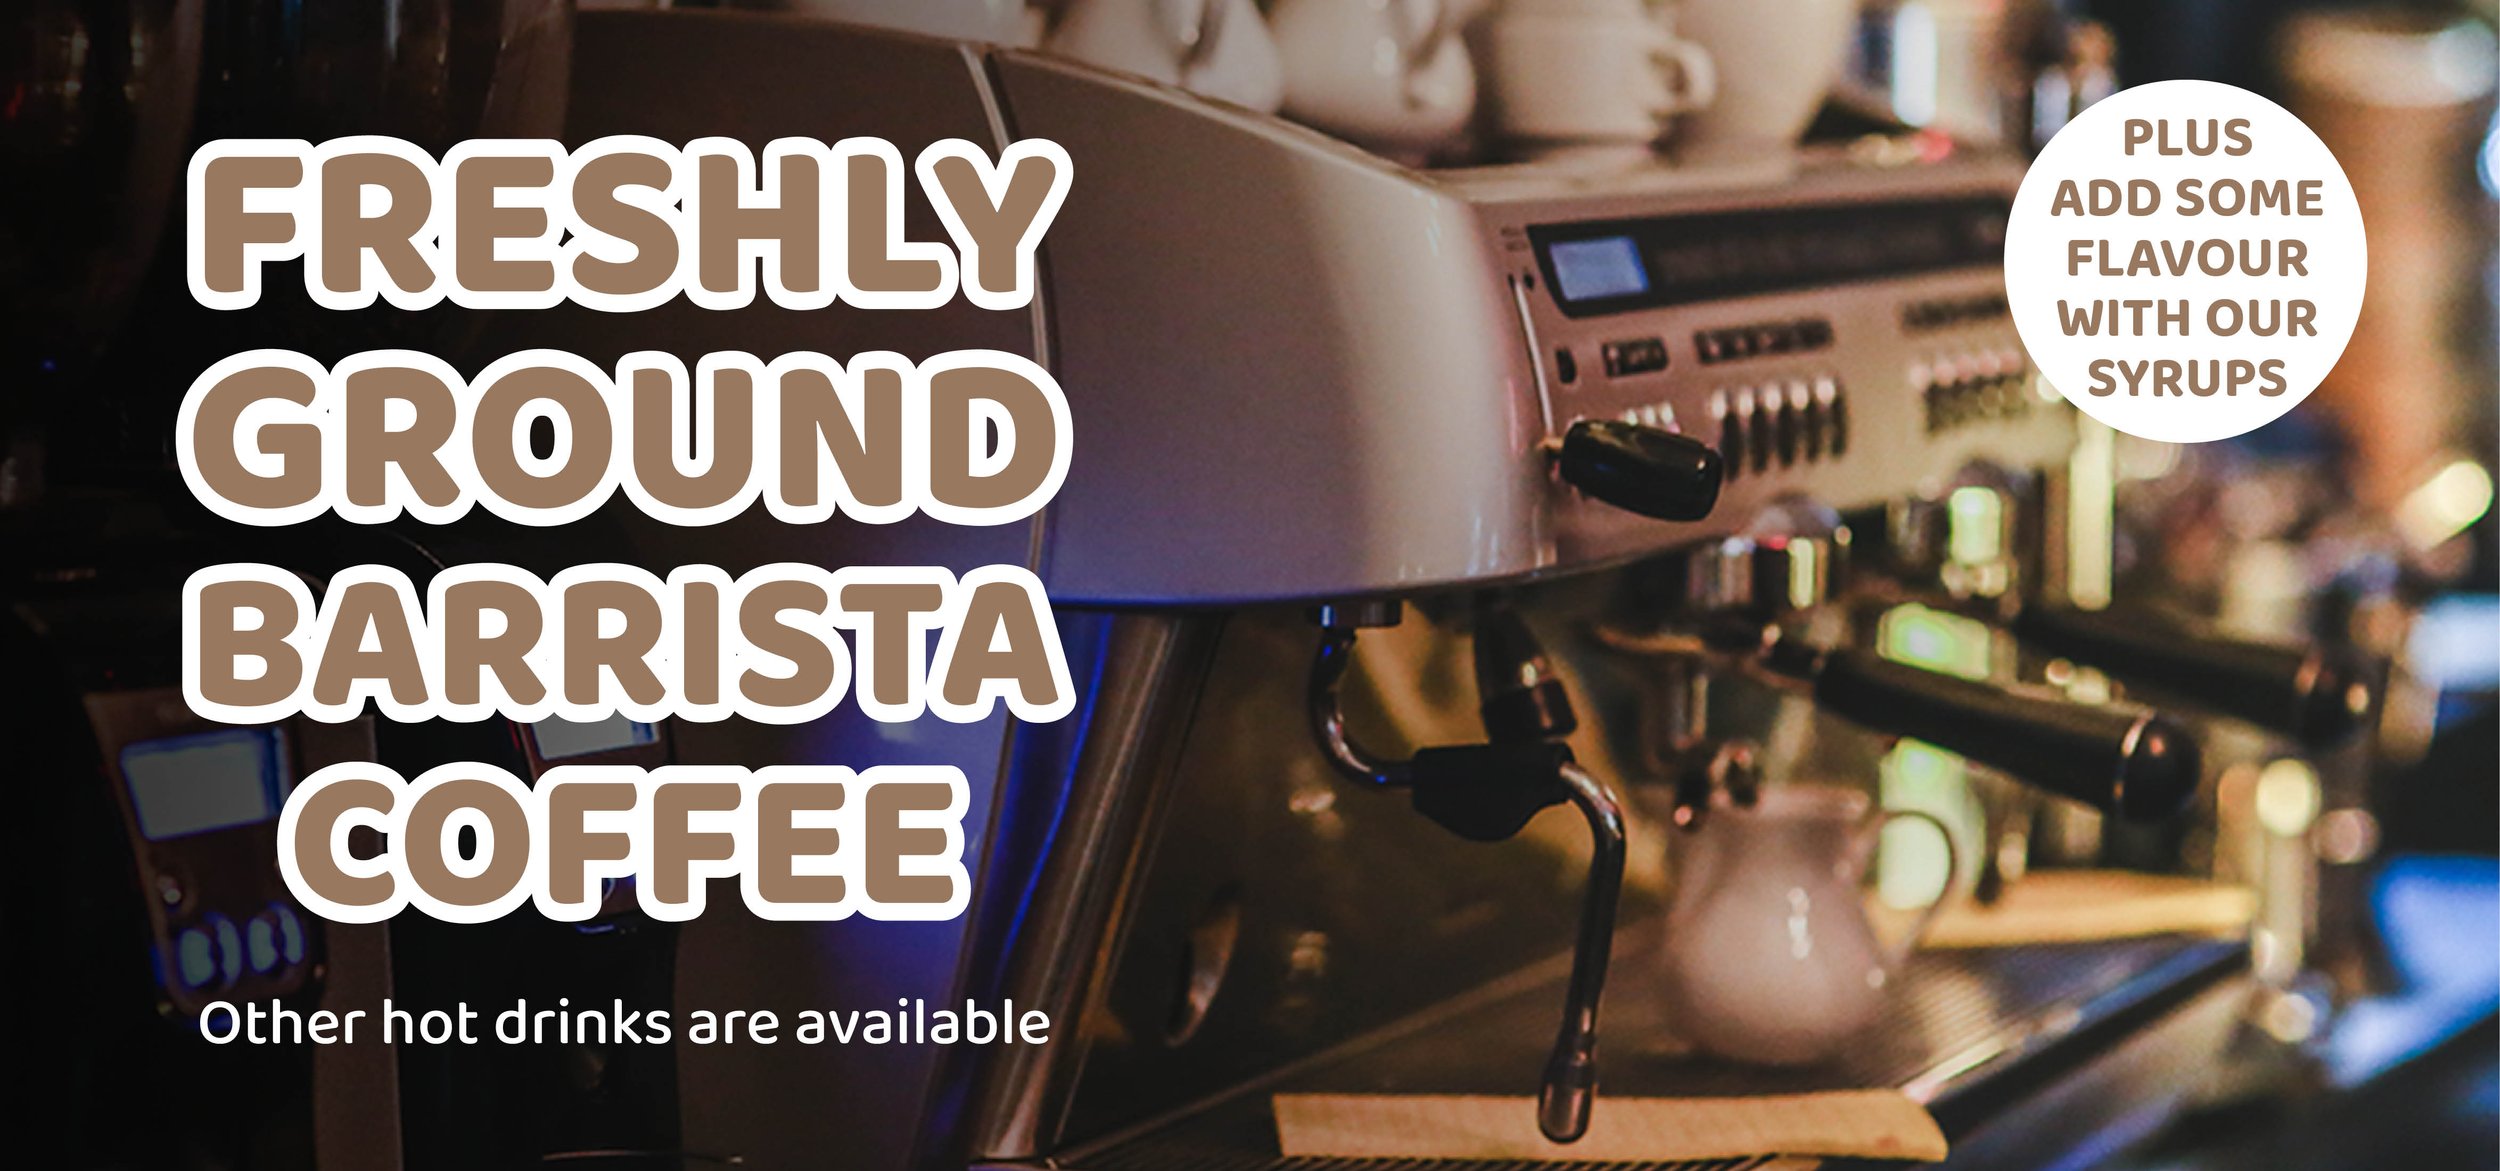 Barista Coffee - Website Banners.jpg